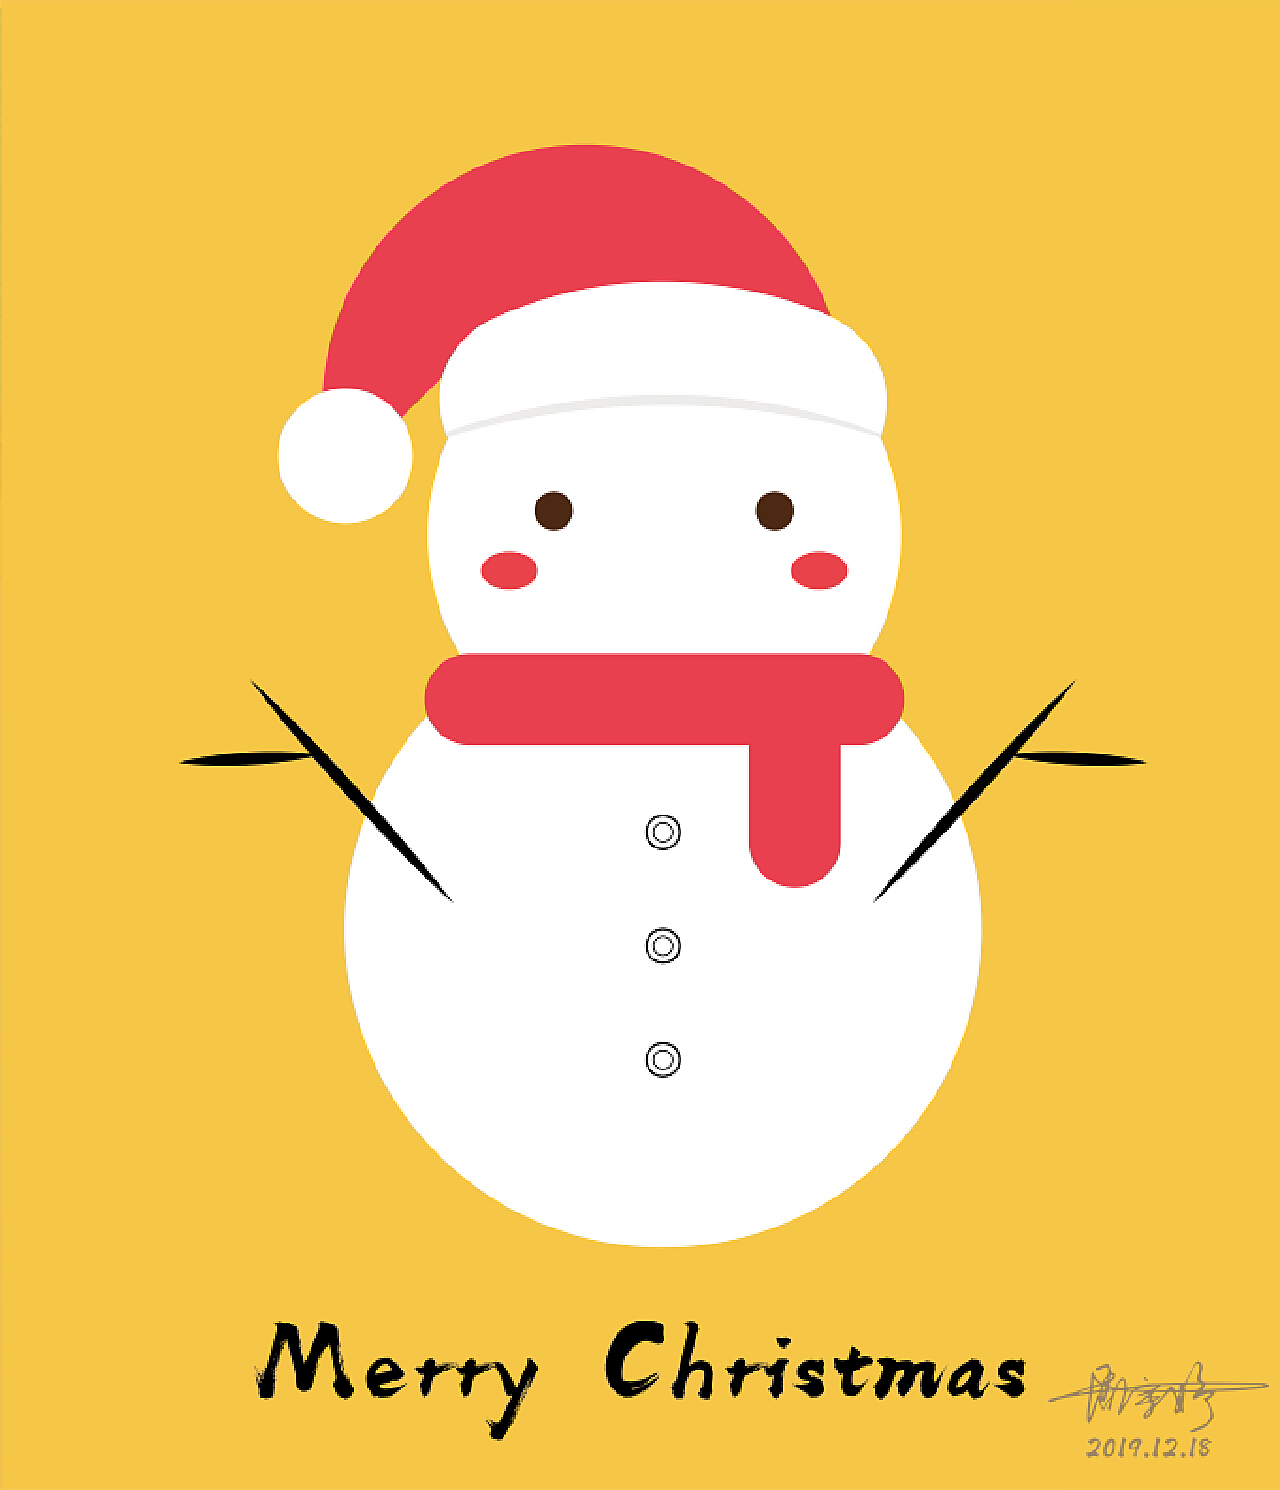 3D圣诞小雪人图片素材-编号09030870-图行天下